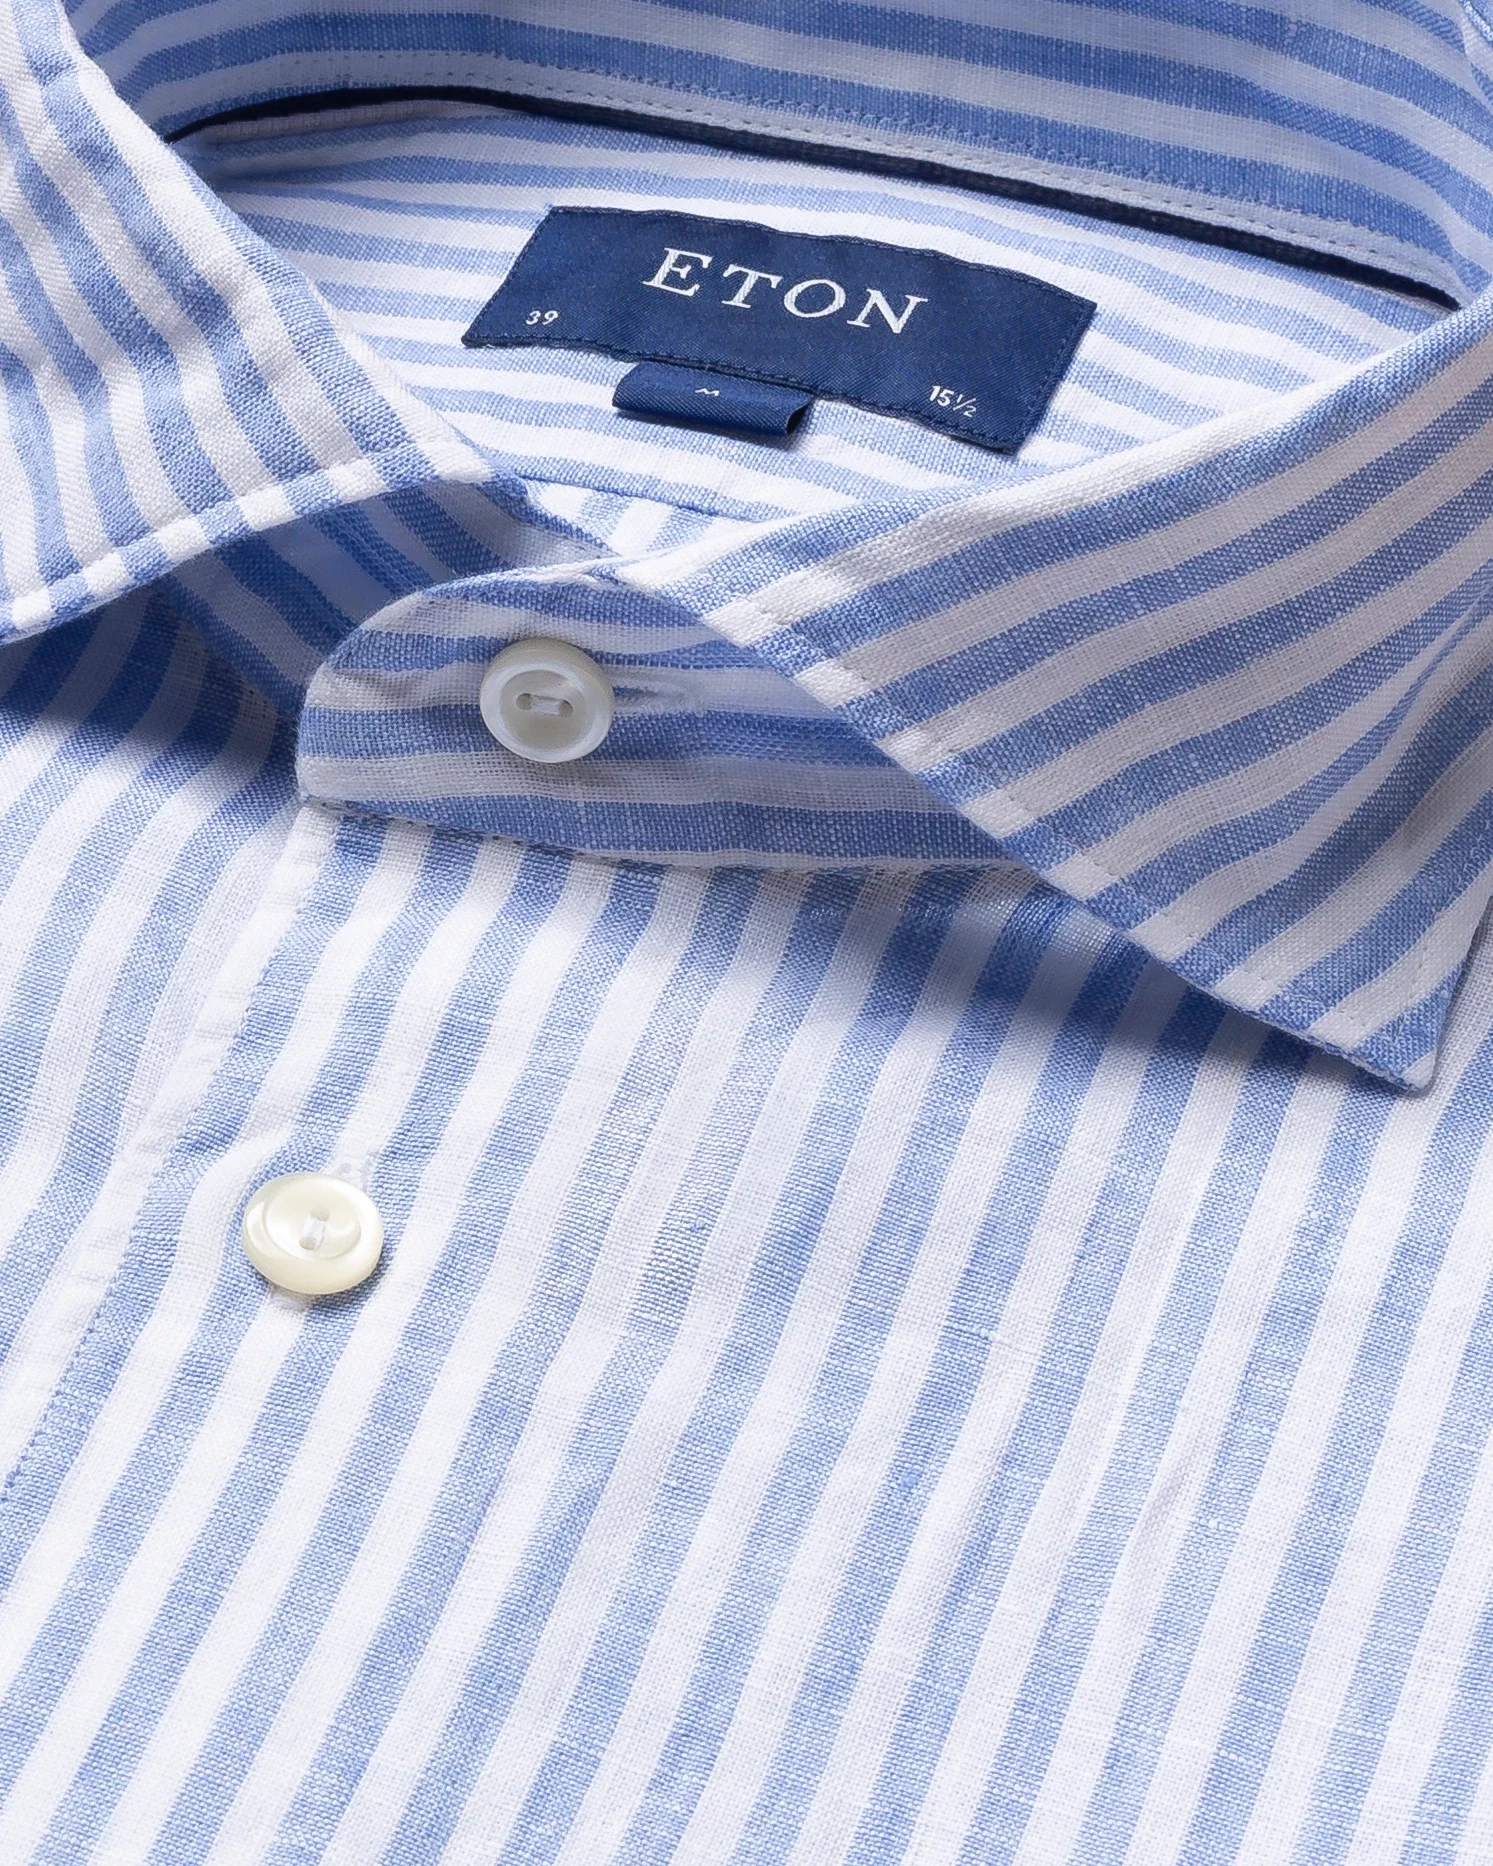 Eton - light blue striped linen shirt